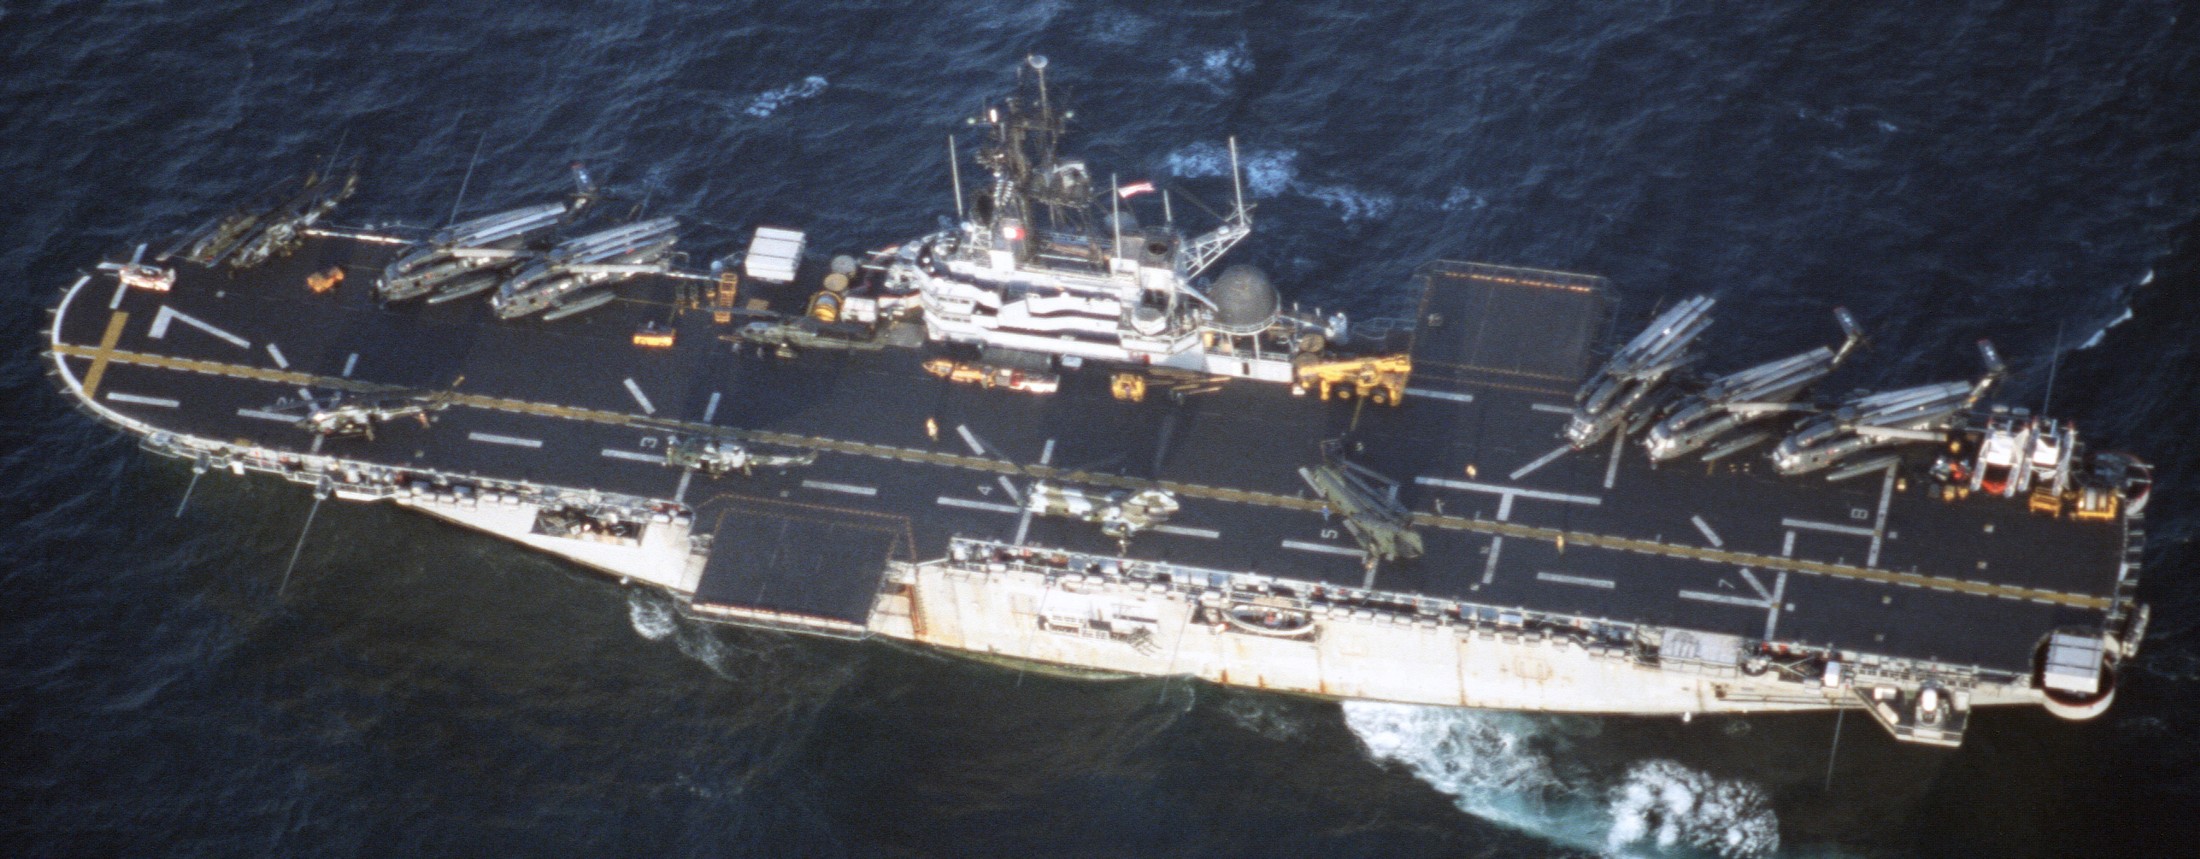 lph-7 uss guadalcanal iwo jima class amphibious assault ship landing platform helicopter us navy 51 persian gulf